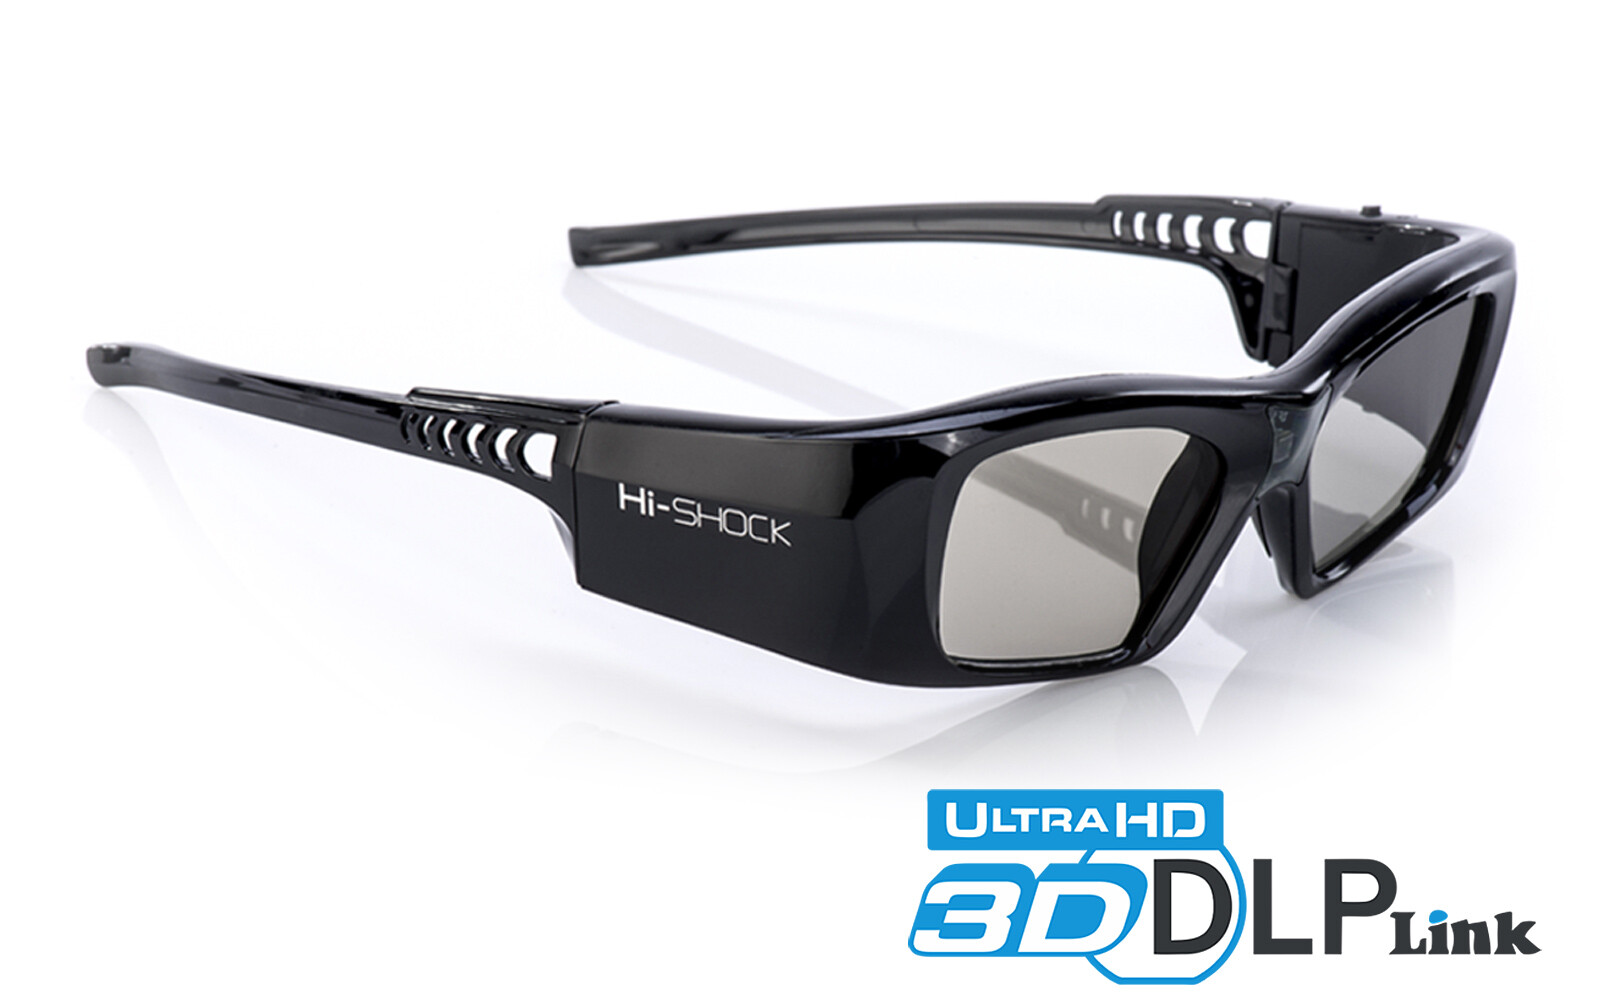 Hi-SHOCK-Pro-7G-Black-Diamond-DLP-Link-3D-Brille-mit-max-Akkukapazitat